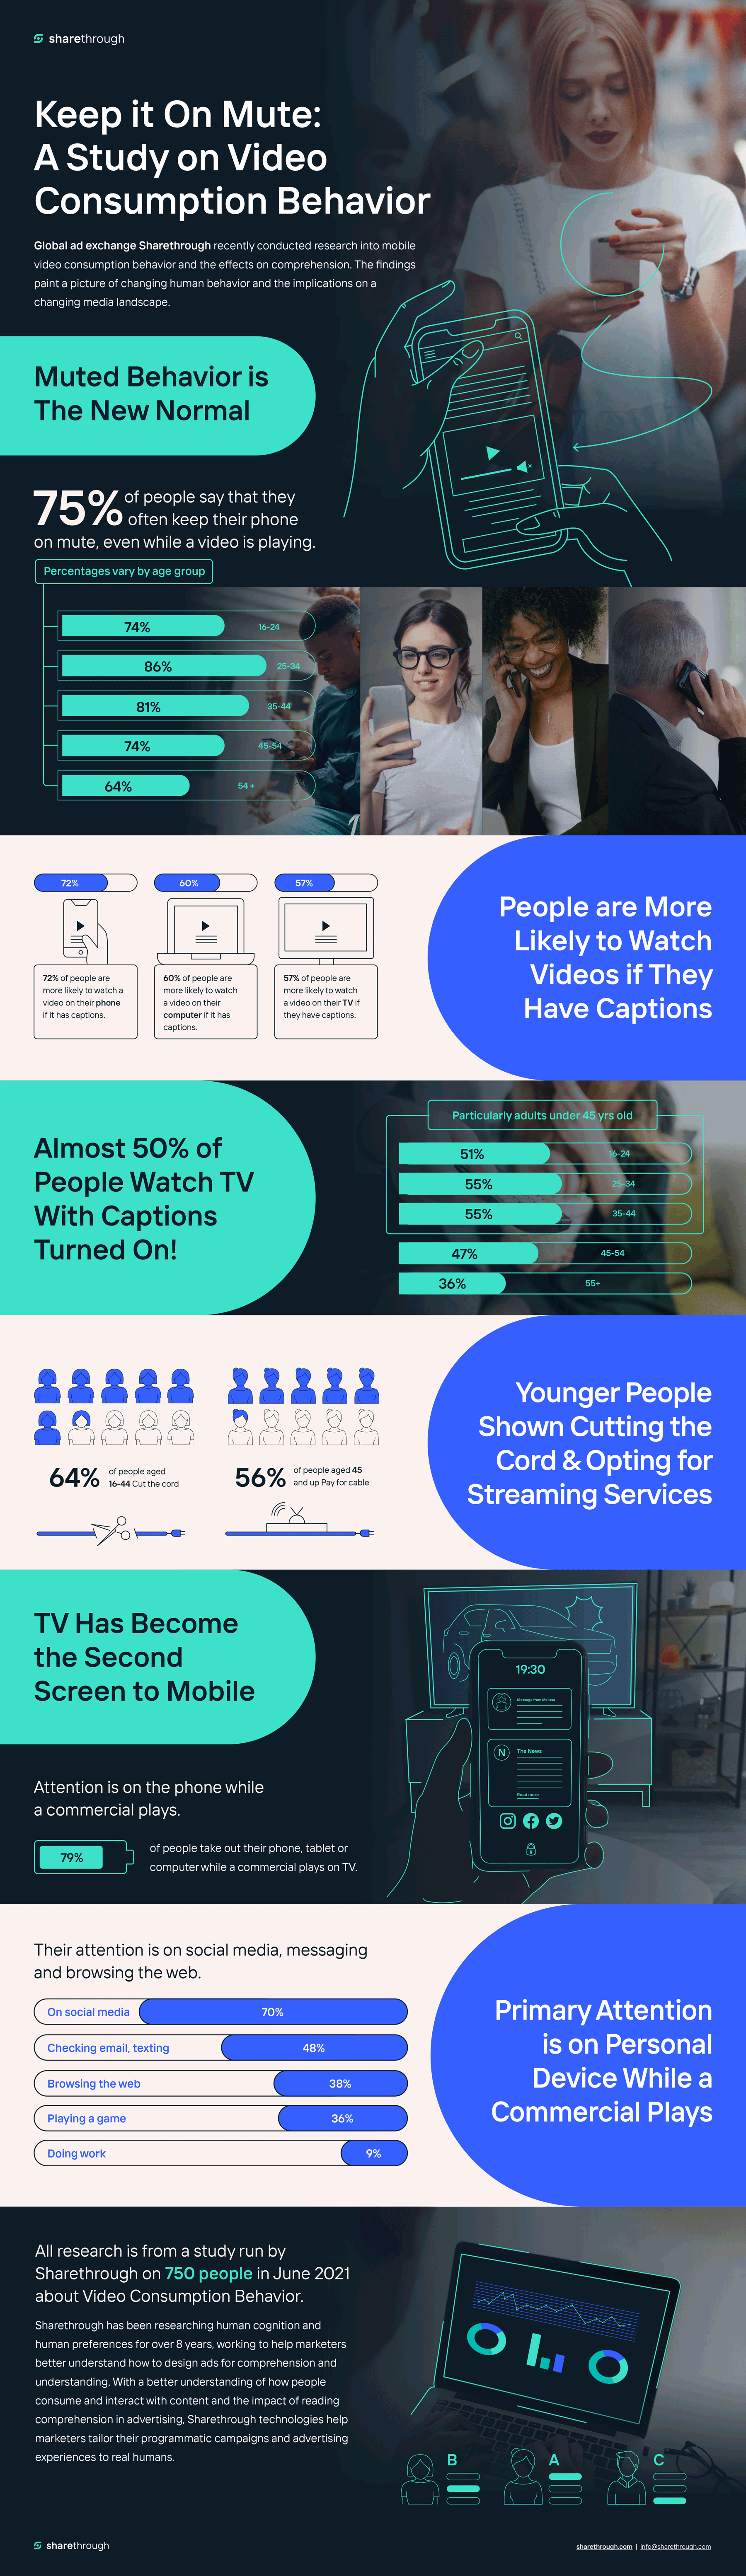 Infographic Video Consumption Behavior Study